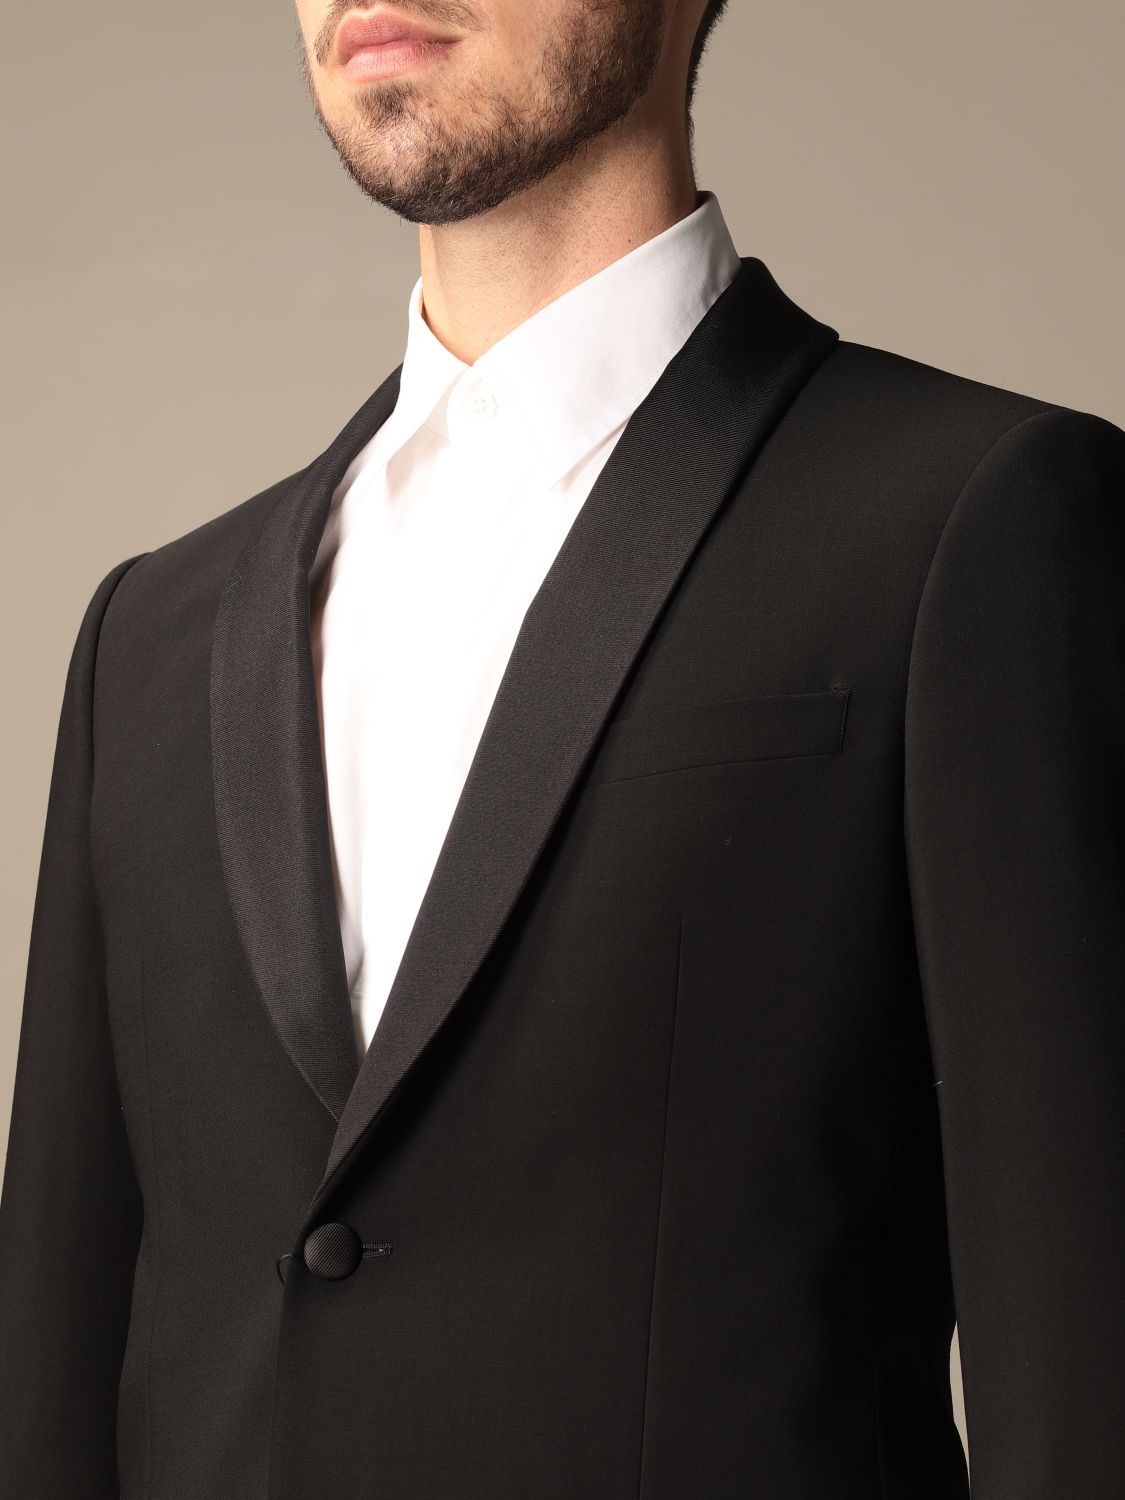 elbow Interpret Dictation GIORGIO ARMANI: suit for man - Black | Giorgio Armani suit 8WGAS007 T002Z  online on GIGLIO.COM